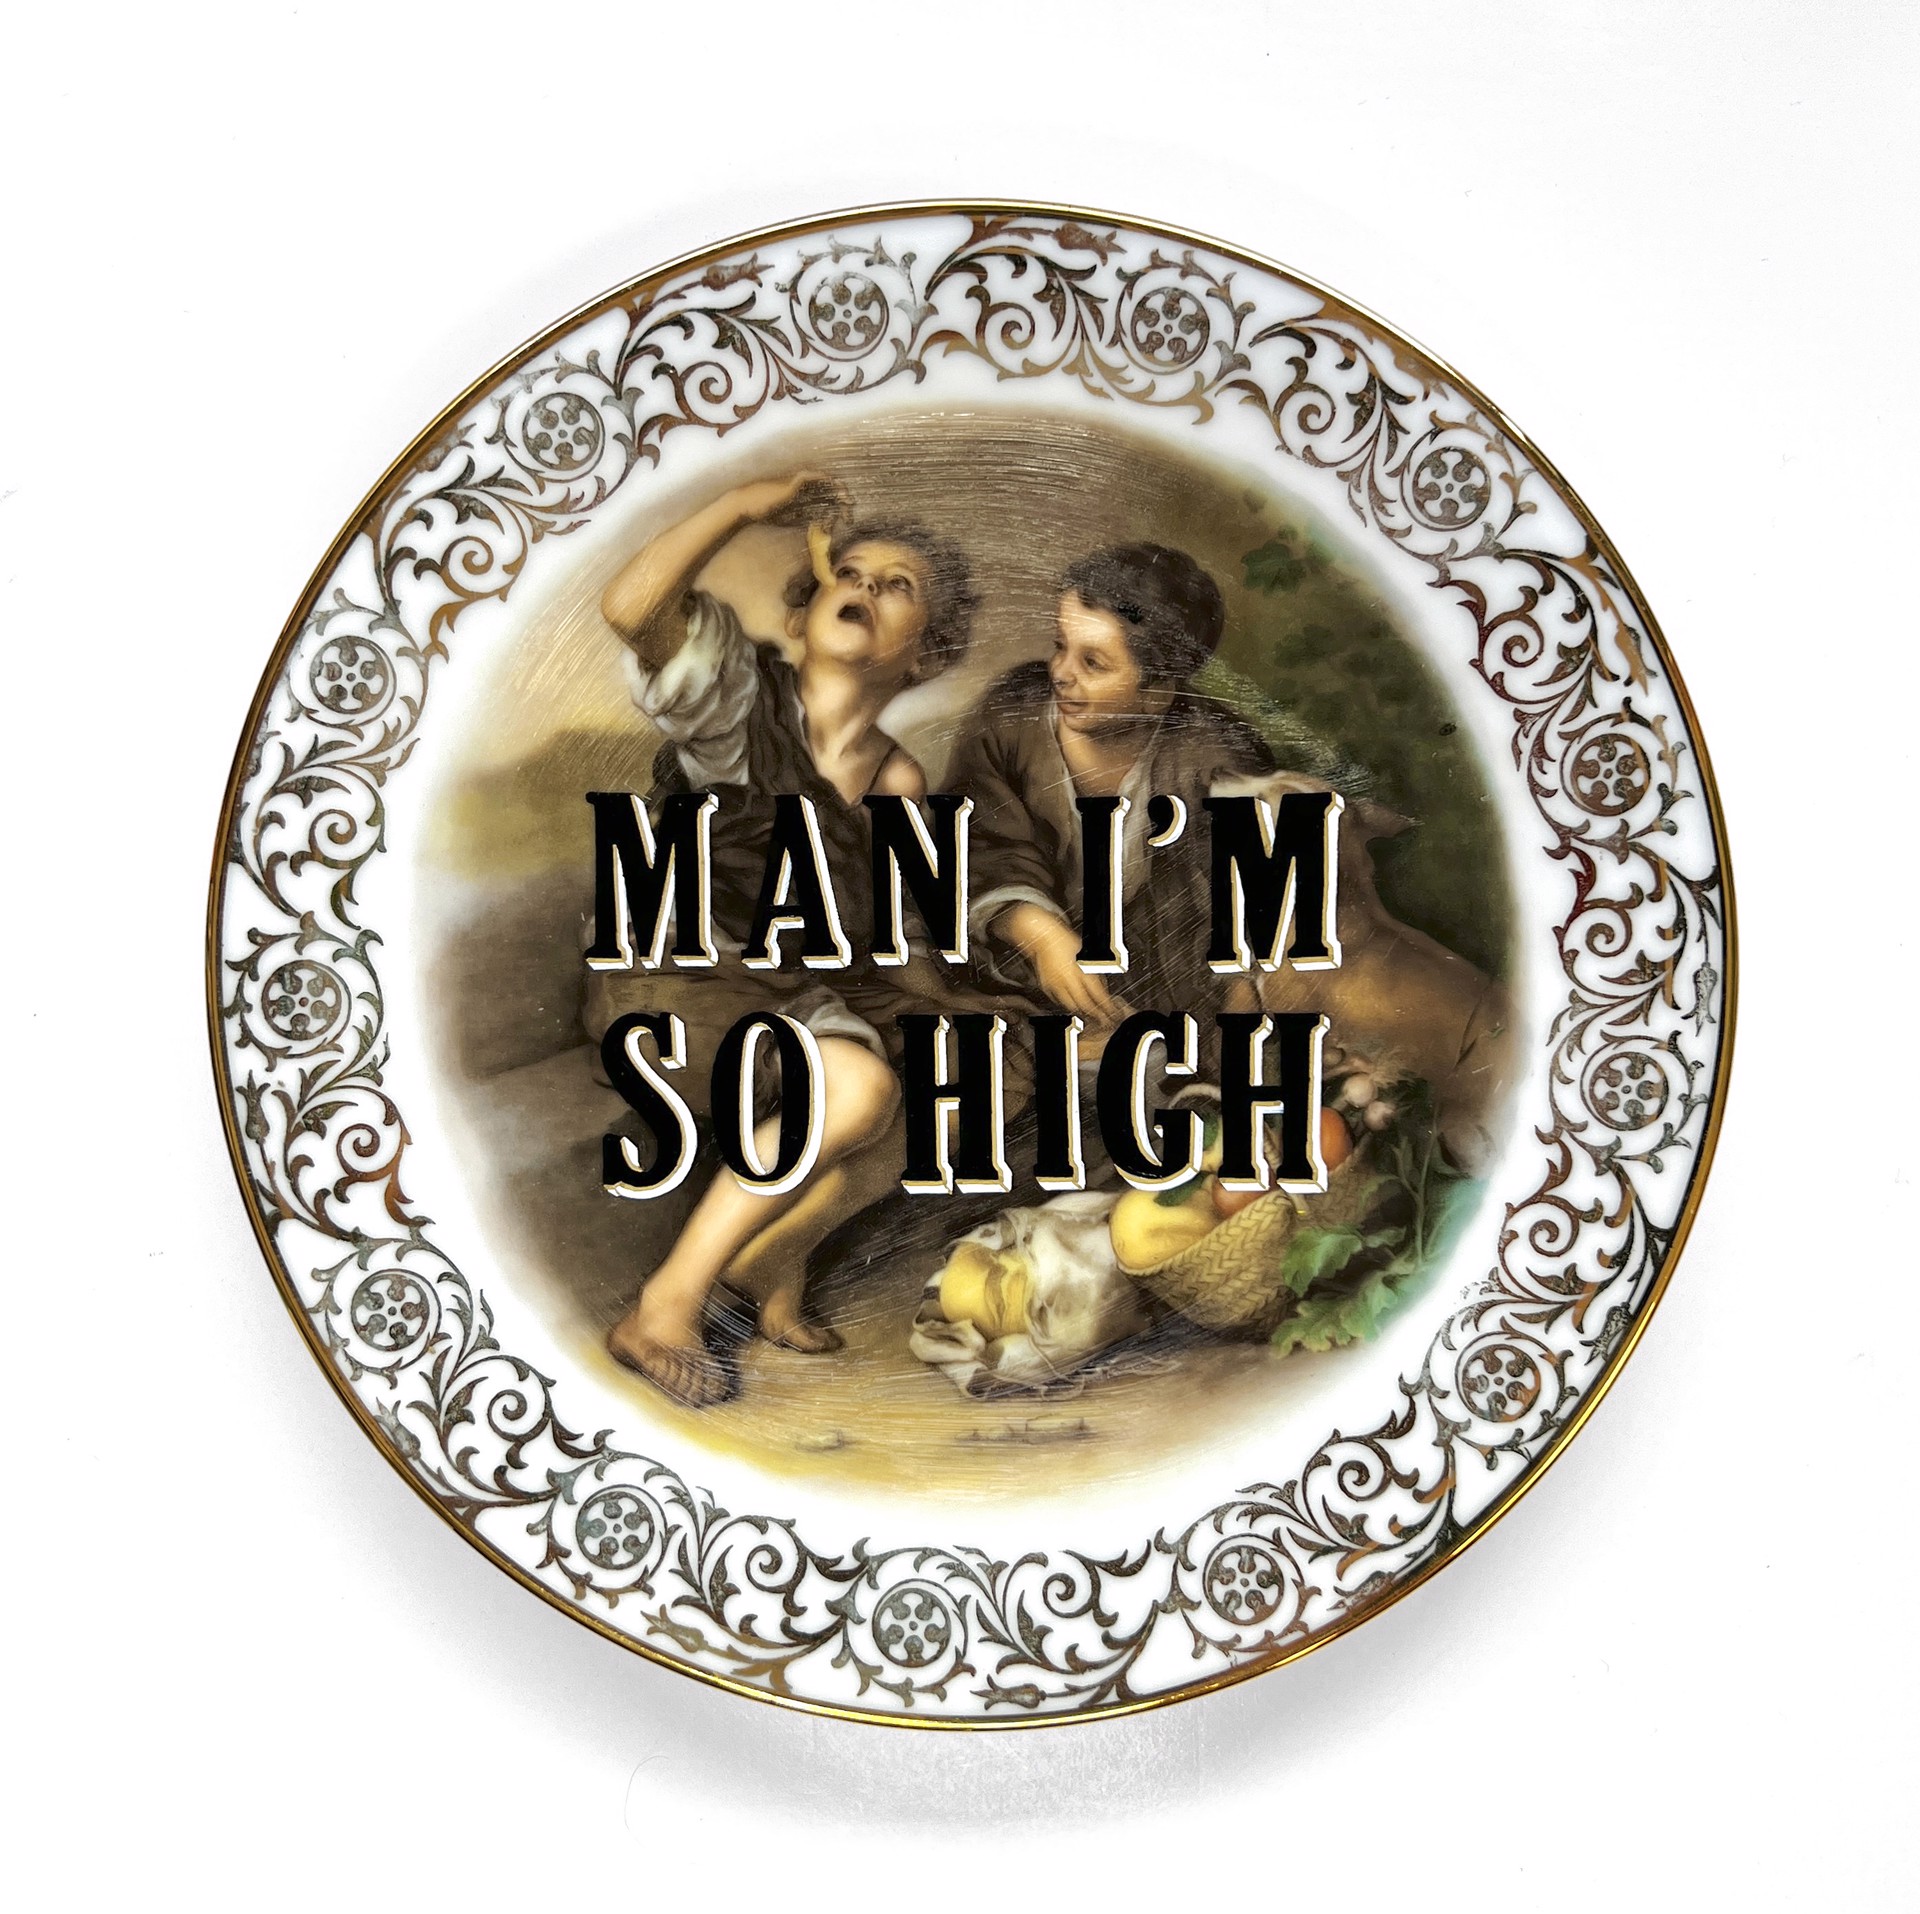 Man I'm so high (dessert plate) by Marie-Claude Marquis